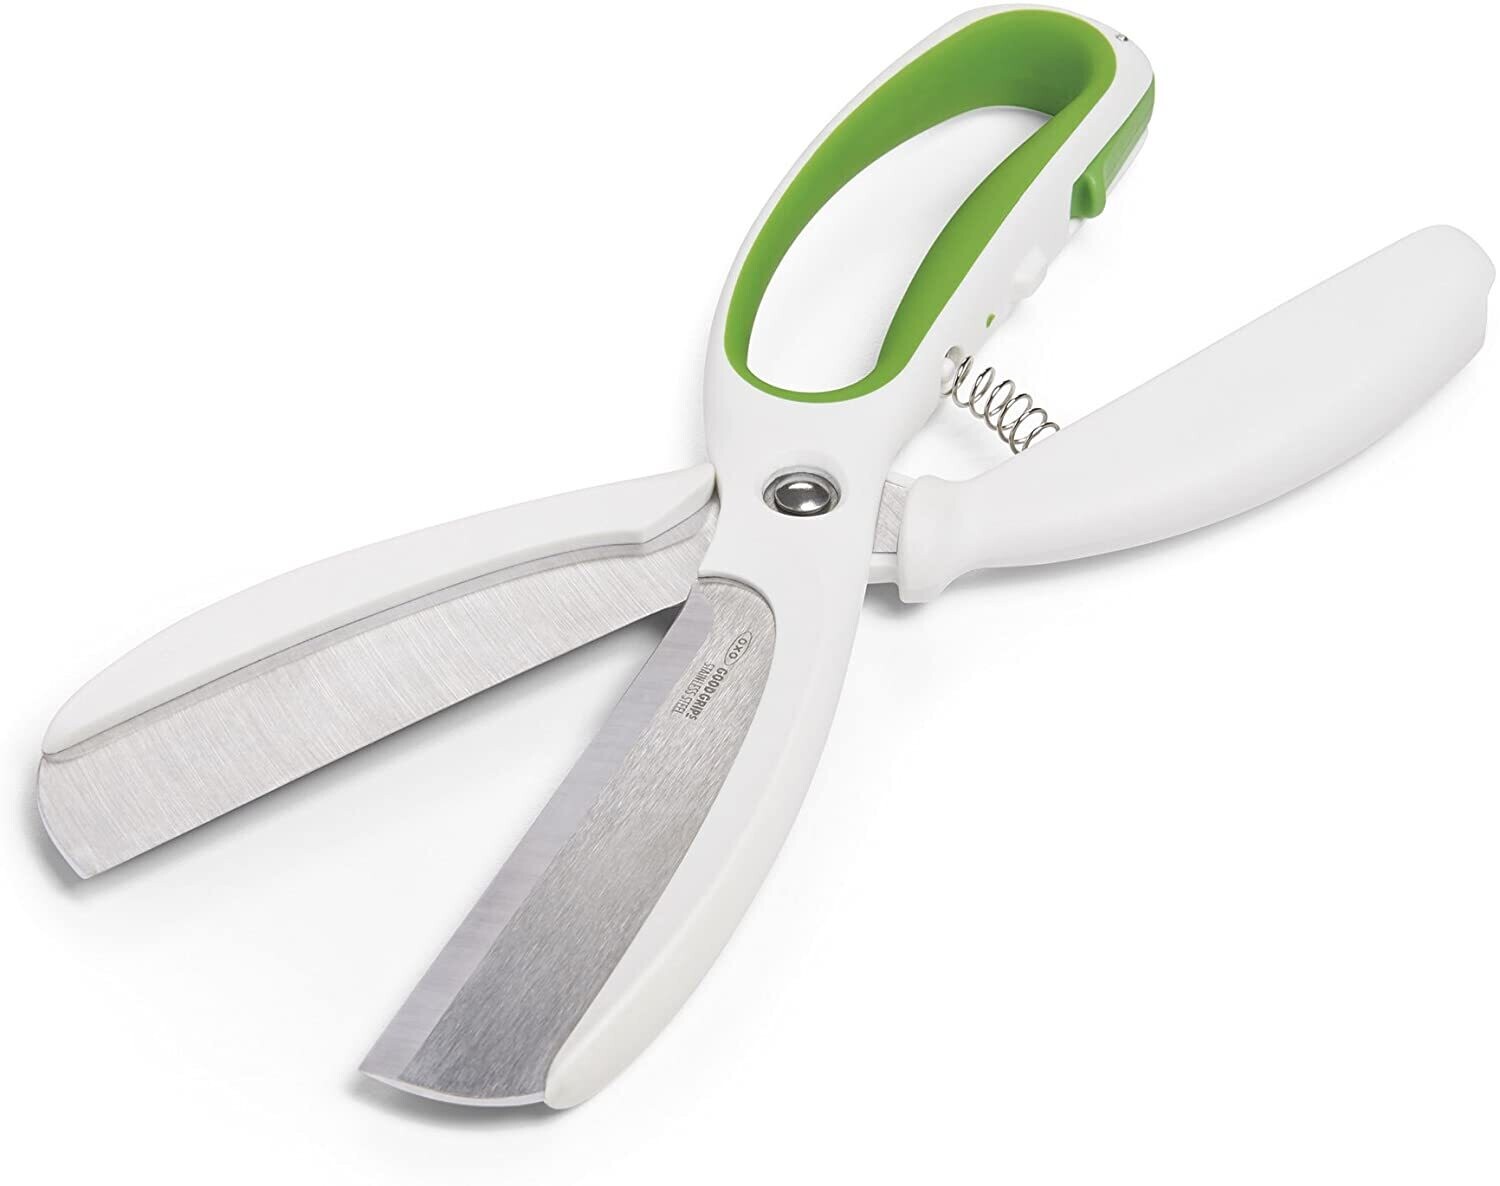 OXO Good Grips Chopped Salad Scissors - Loft410